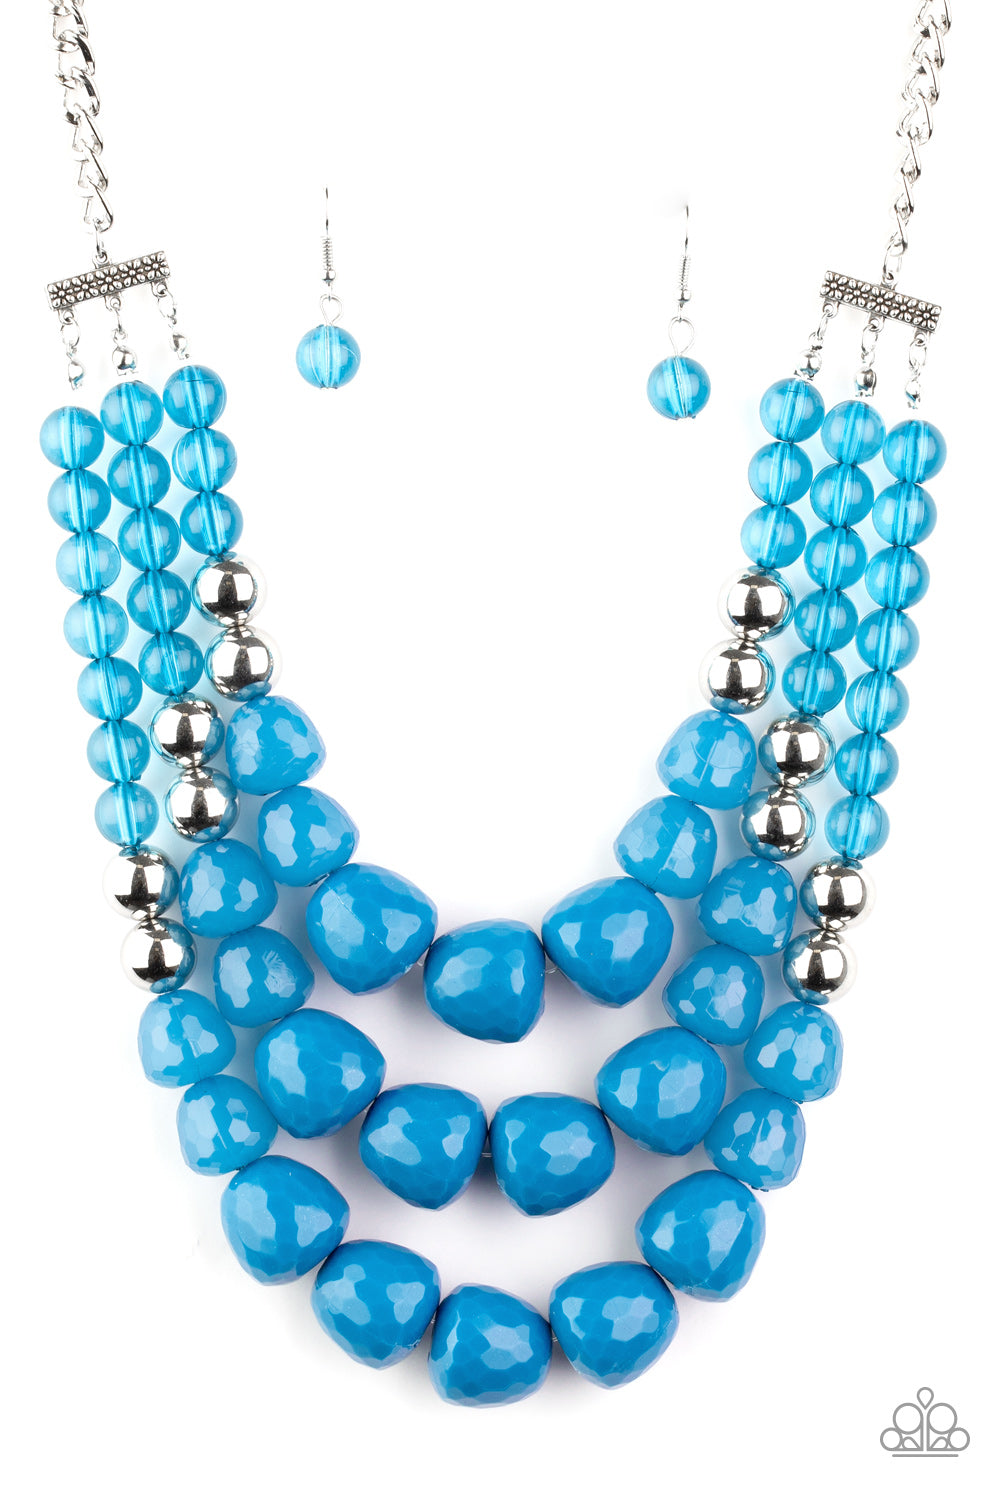 Forbidden Fruit Necklace - Blue